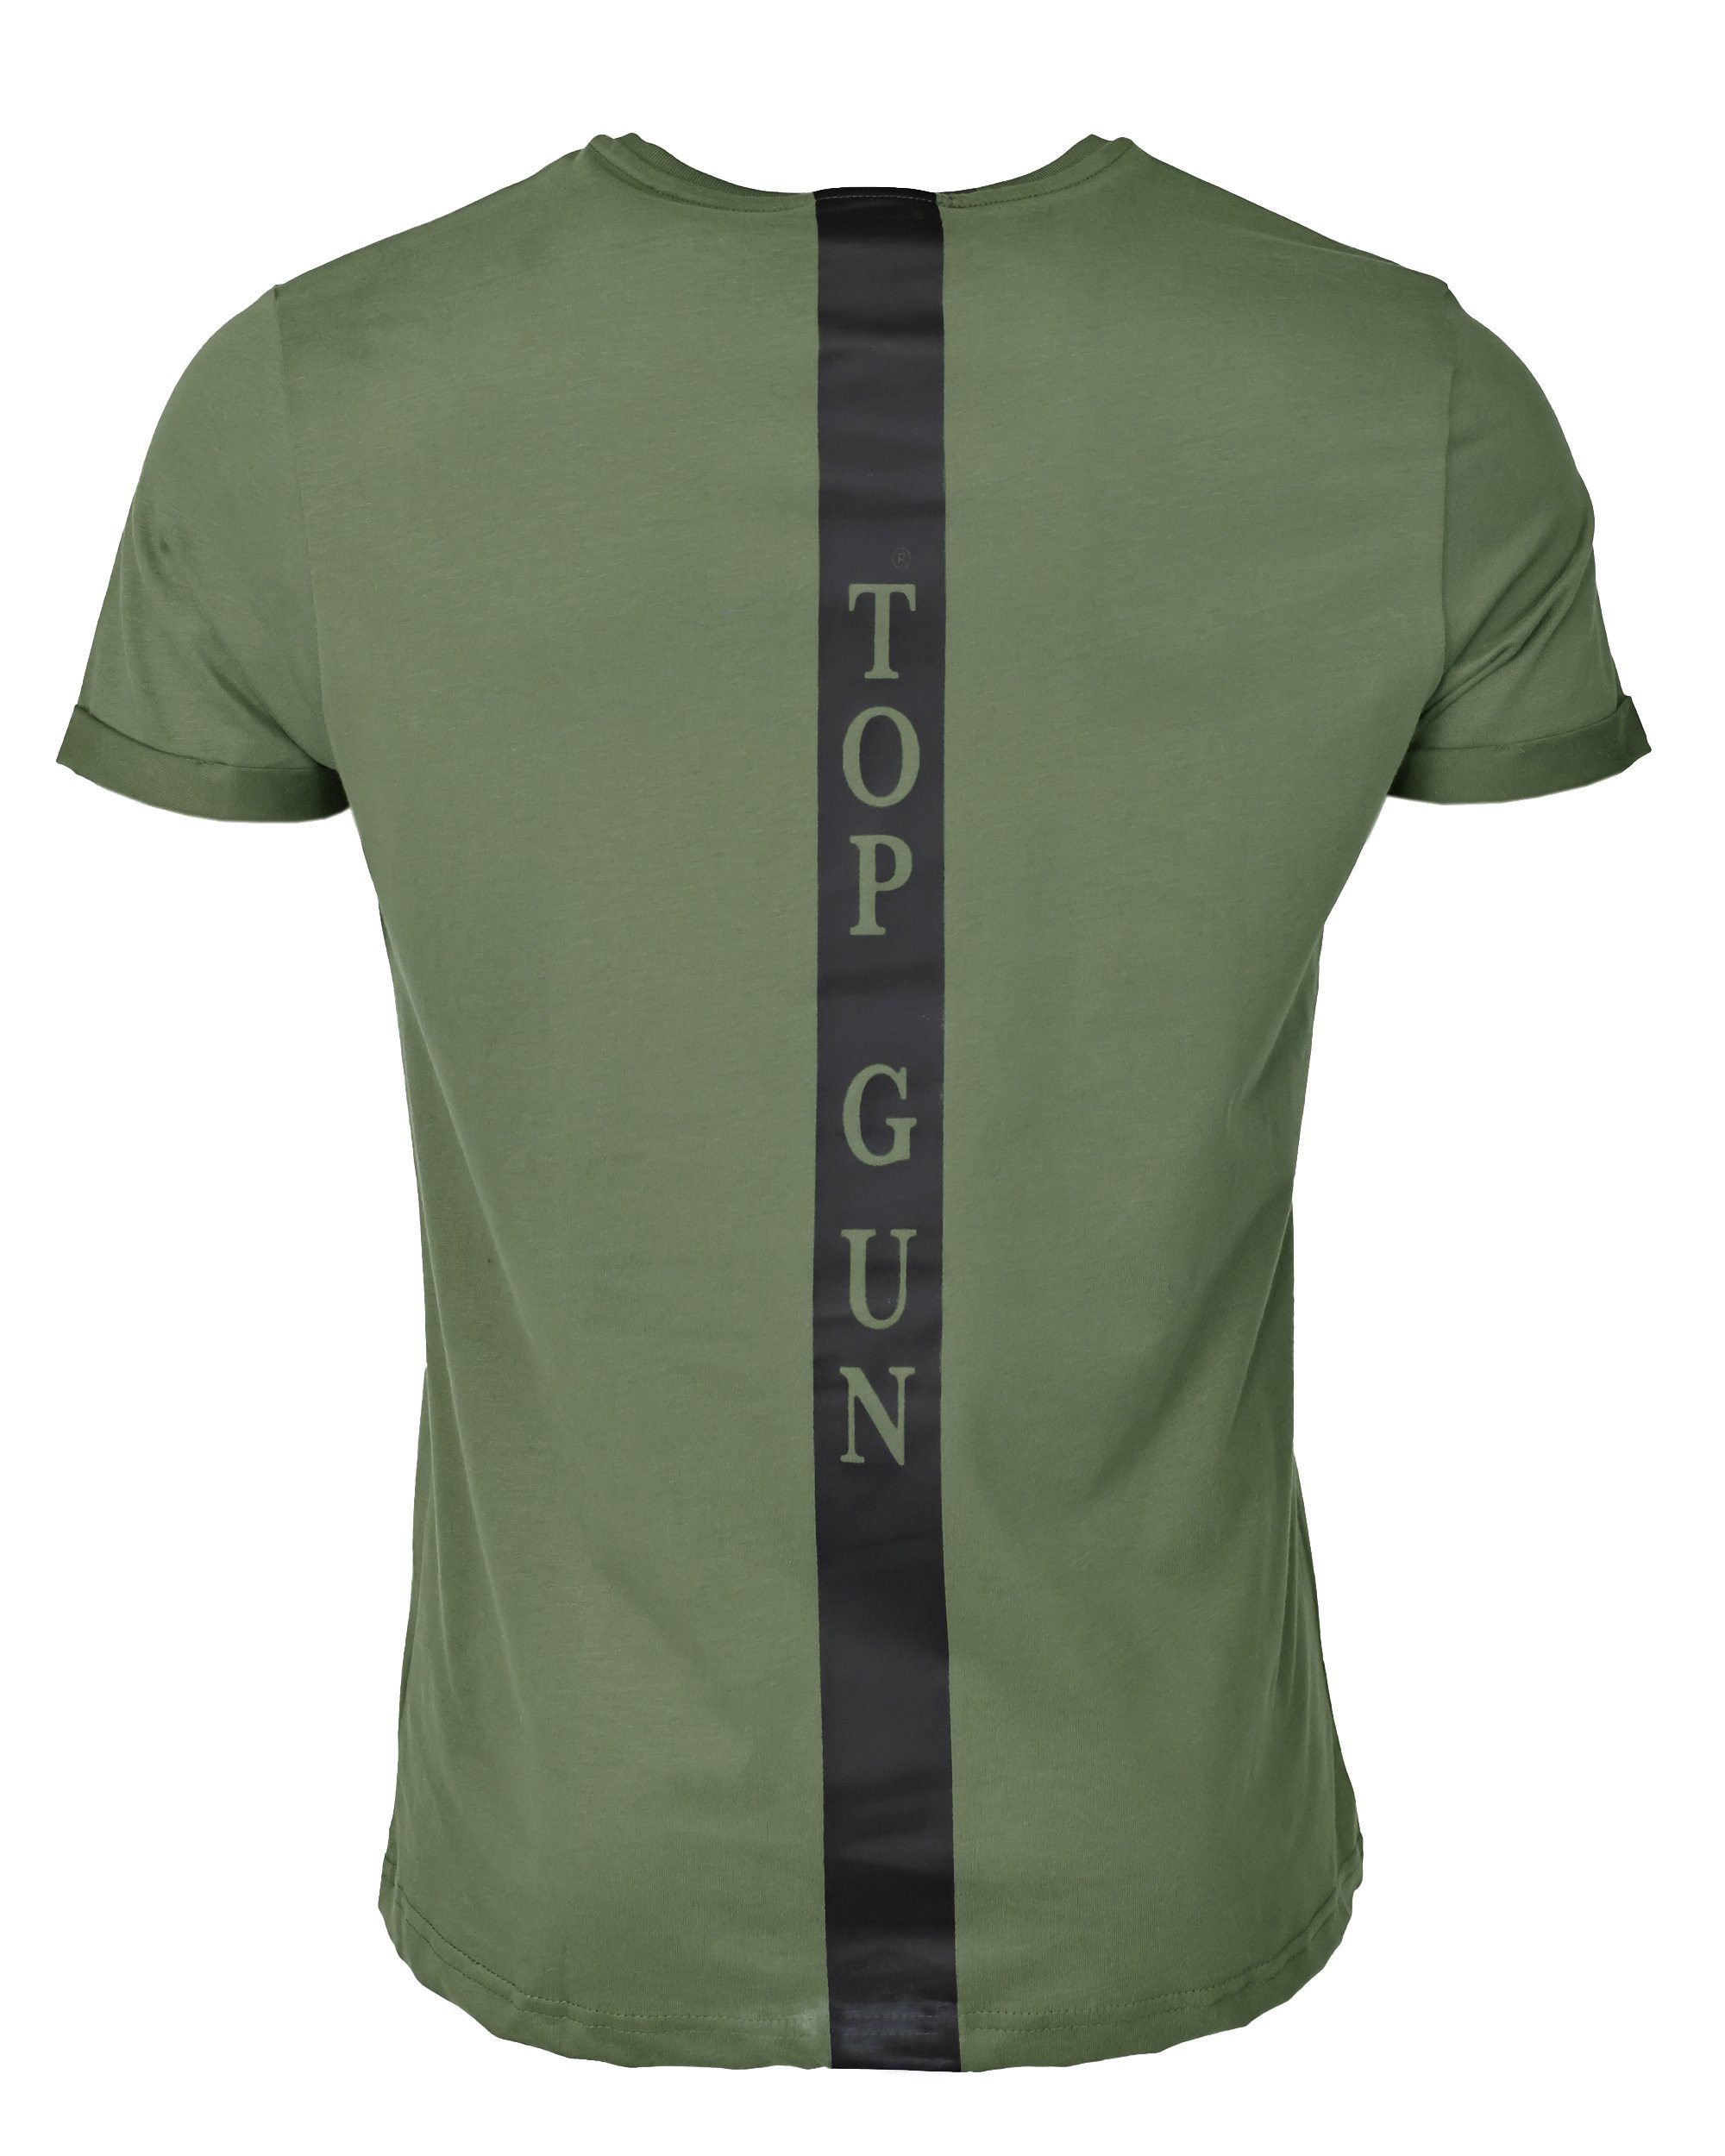 TG20213011 TOP GUN olive T-Shirt